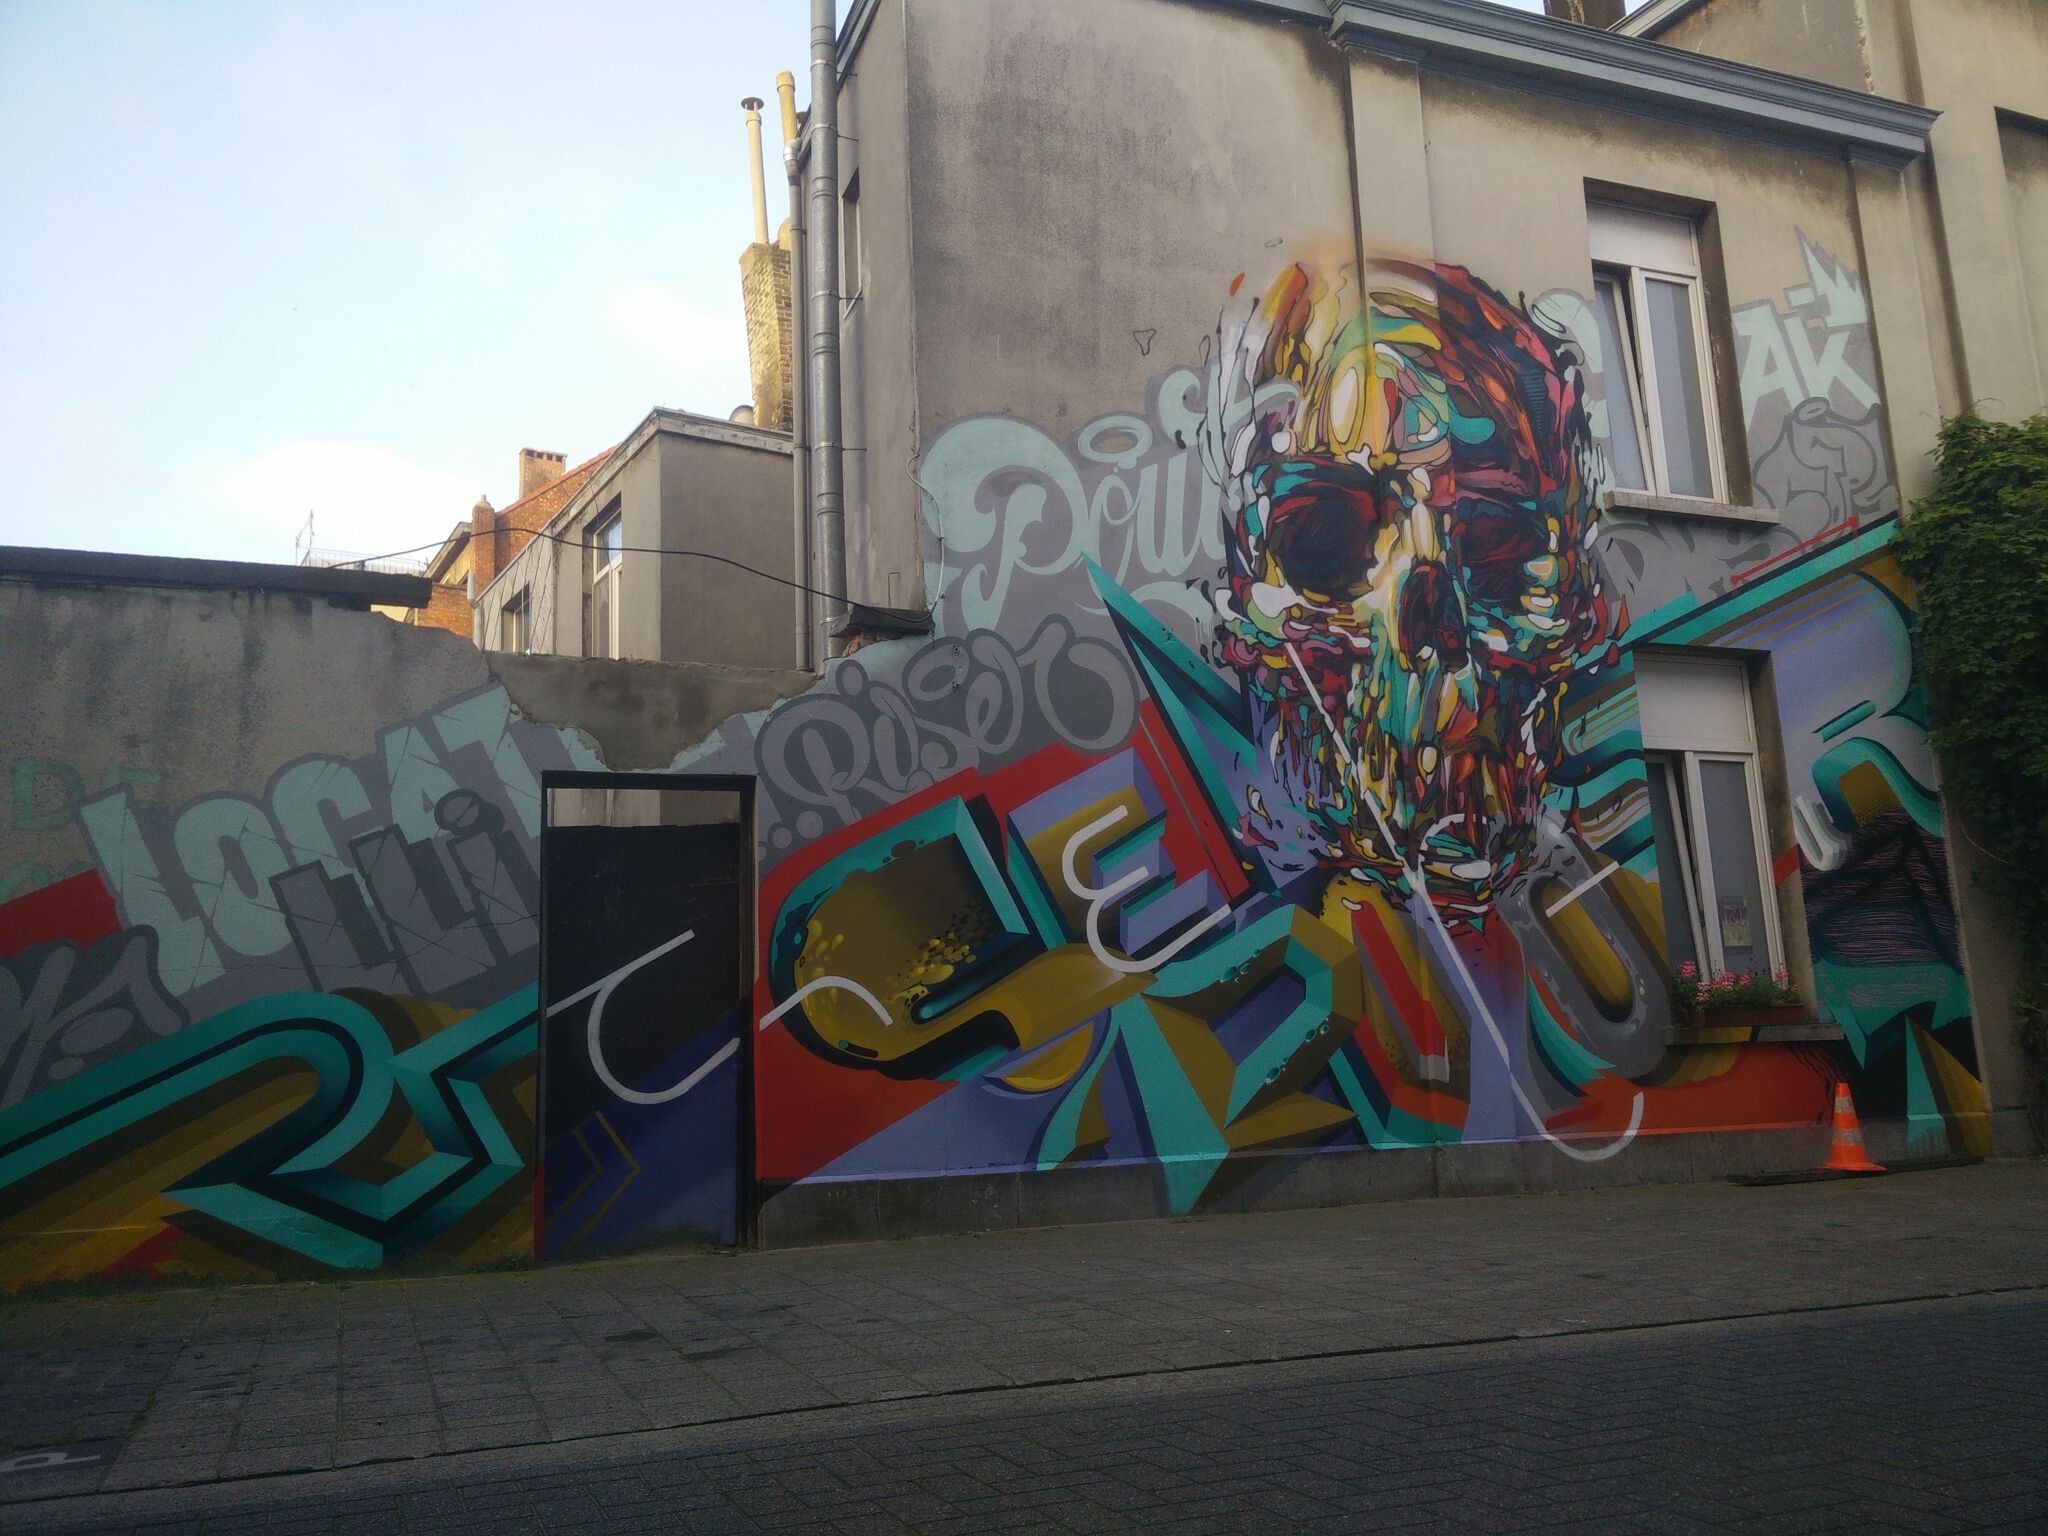 Steve Locatelli, Rise One, Pout, Semor the Mad One&mdash;Skull Graffiti